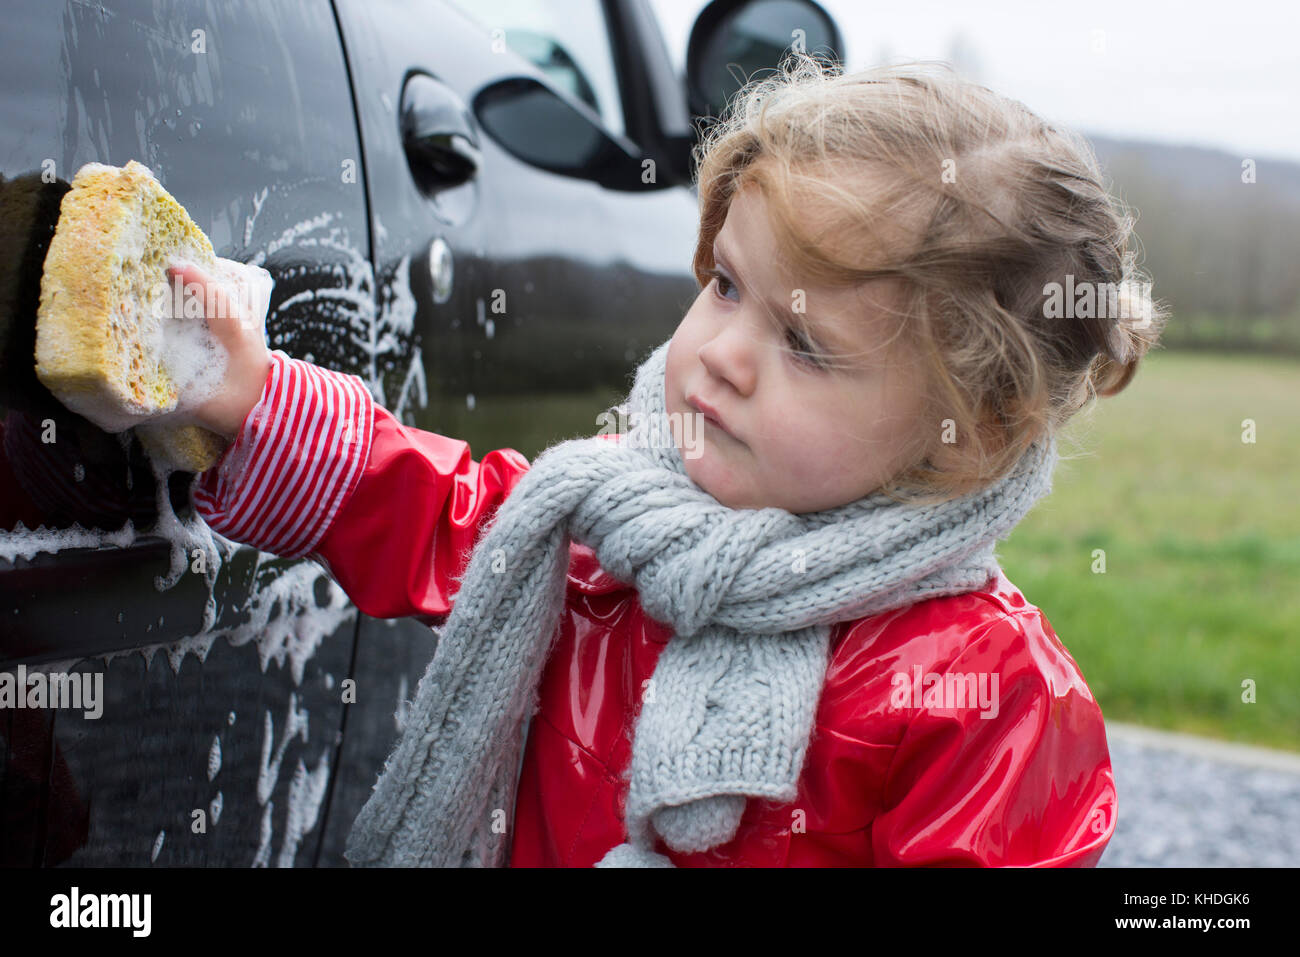 Little girl washing car Banque D'Images